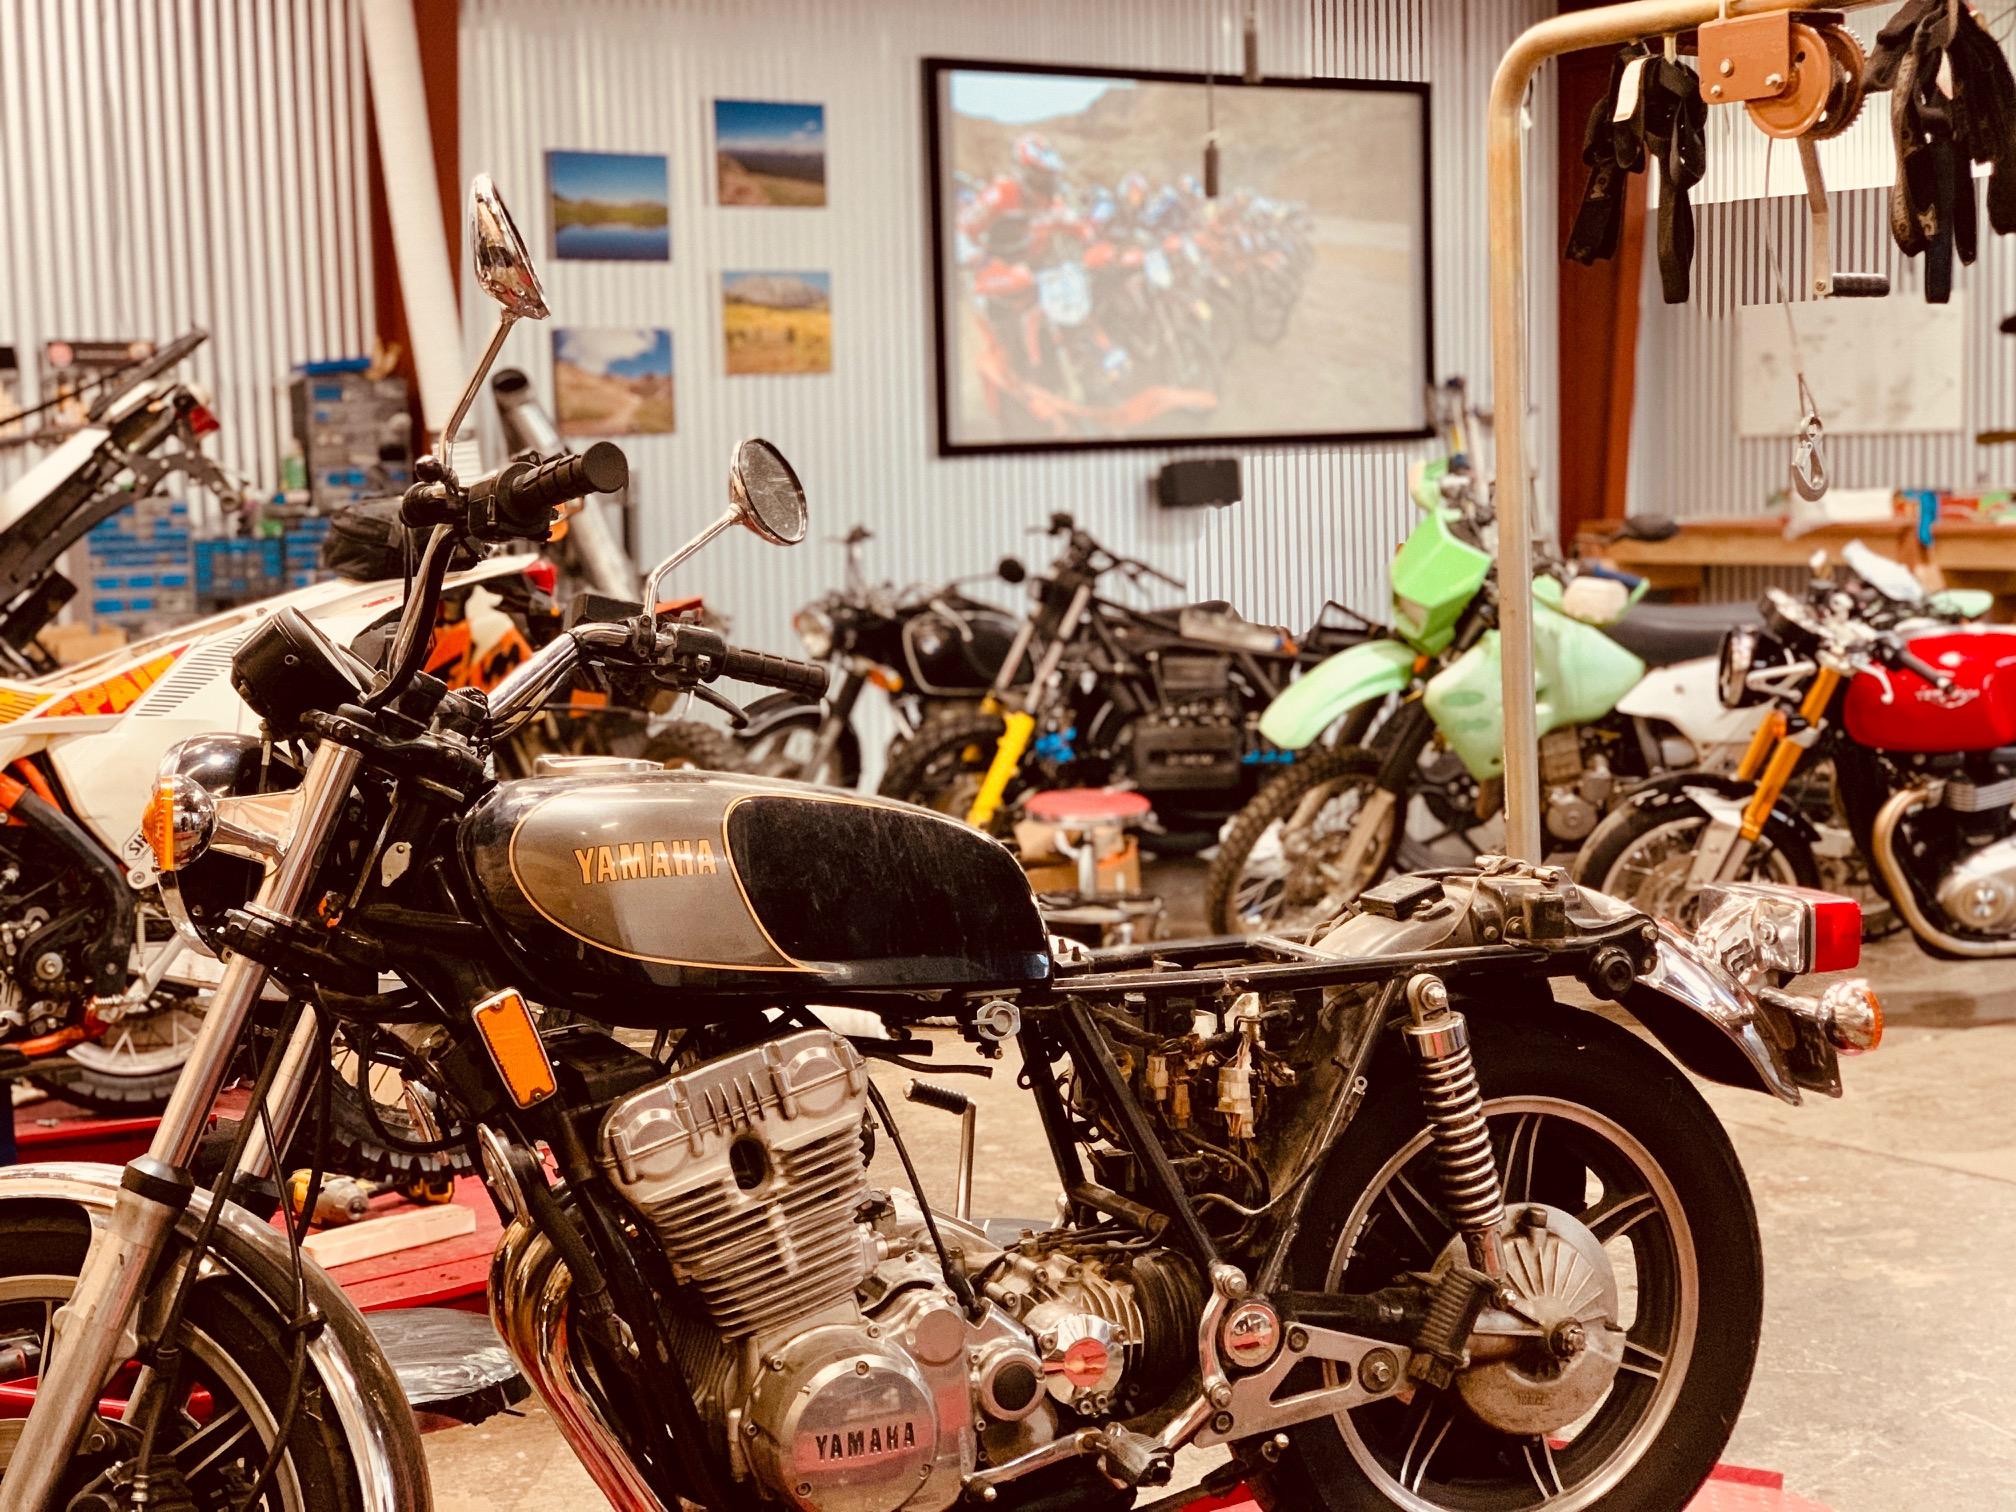 House of Motorrad's Winter Bike Maintenance and Film Series